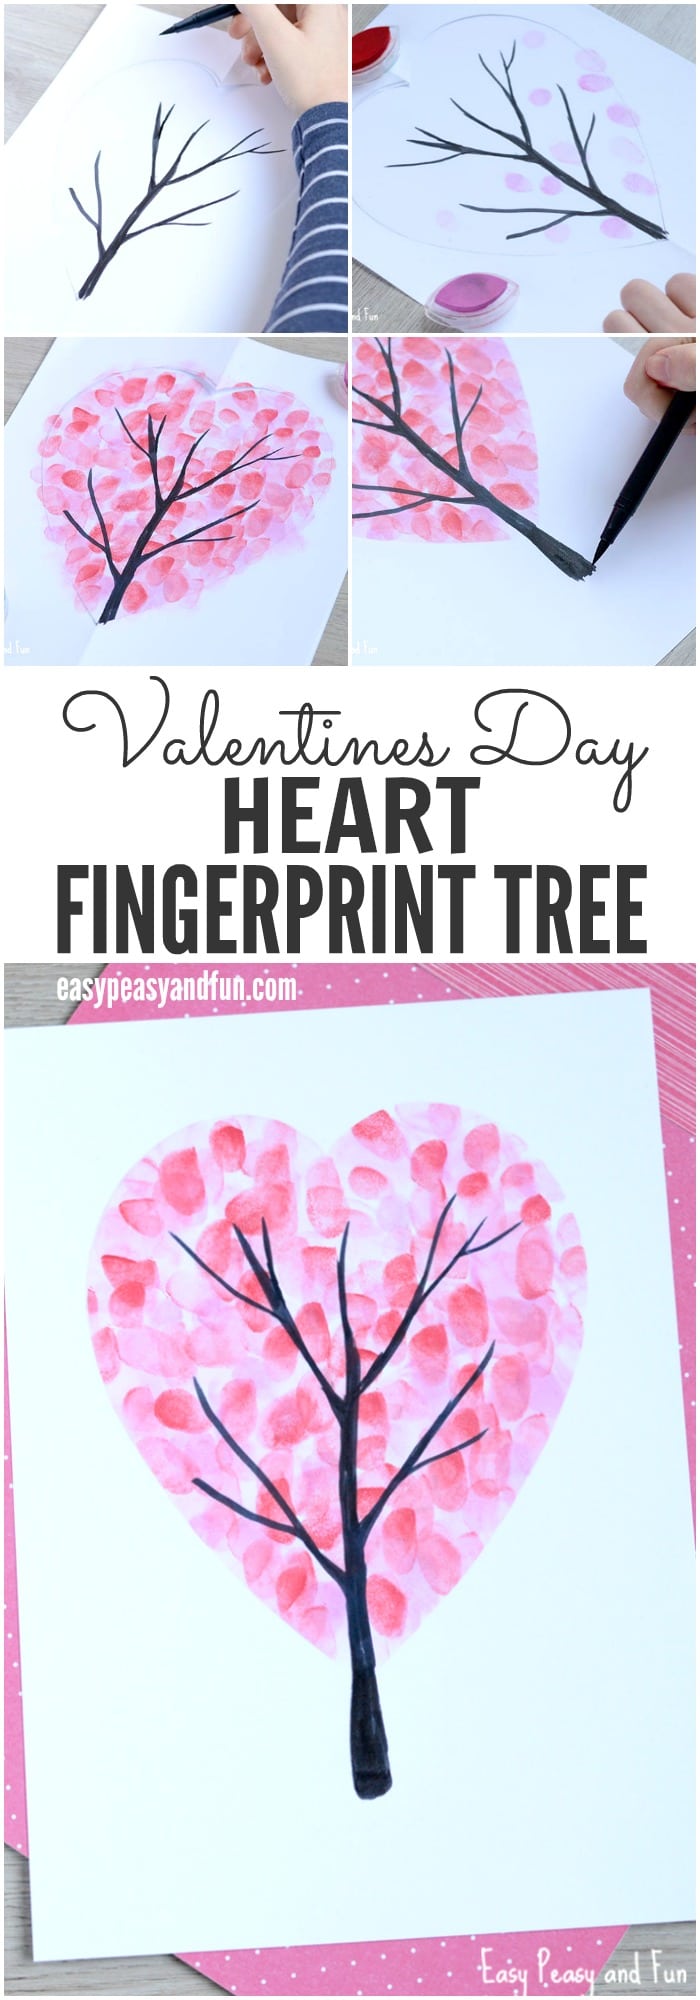 Valentines Day Heart Fingerprint Tree Craft for Kids